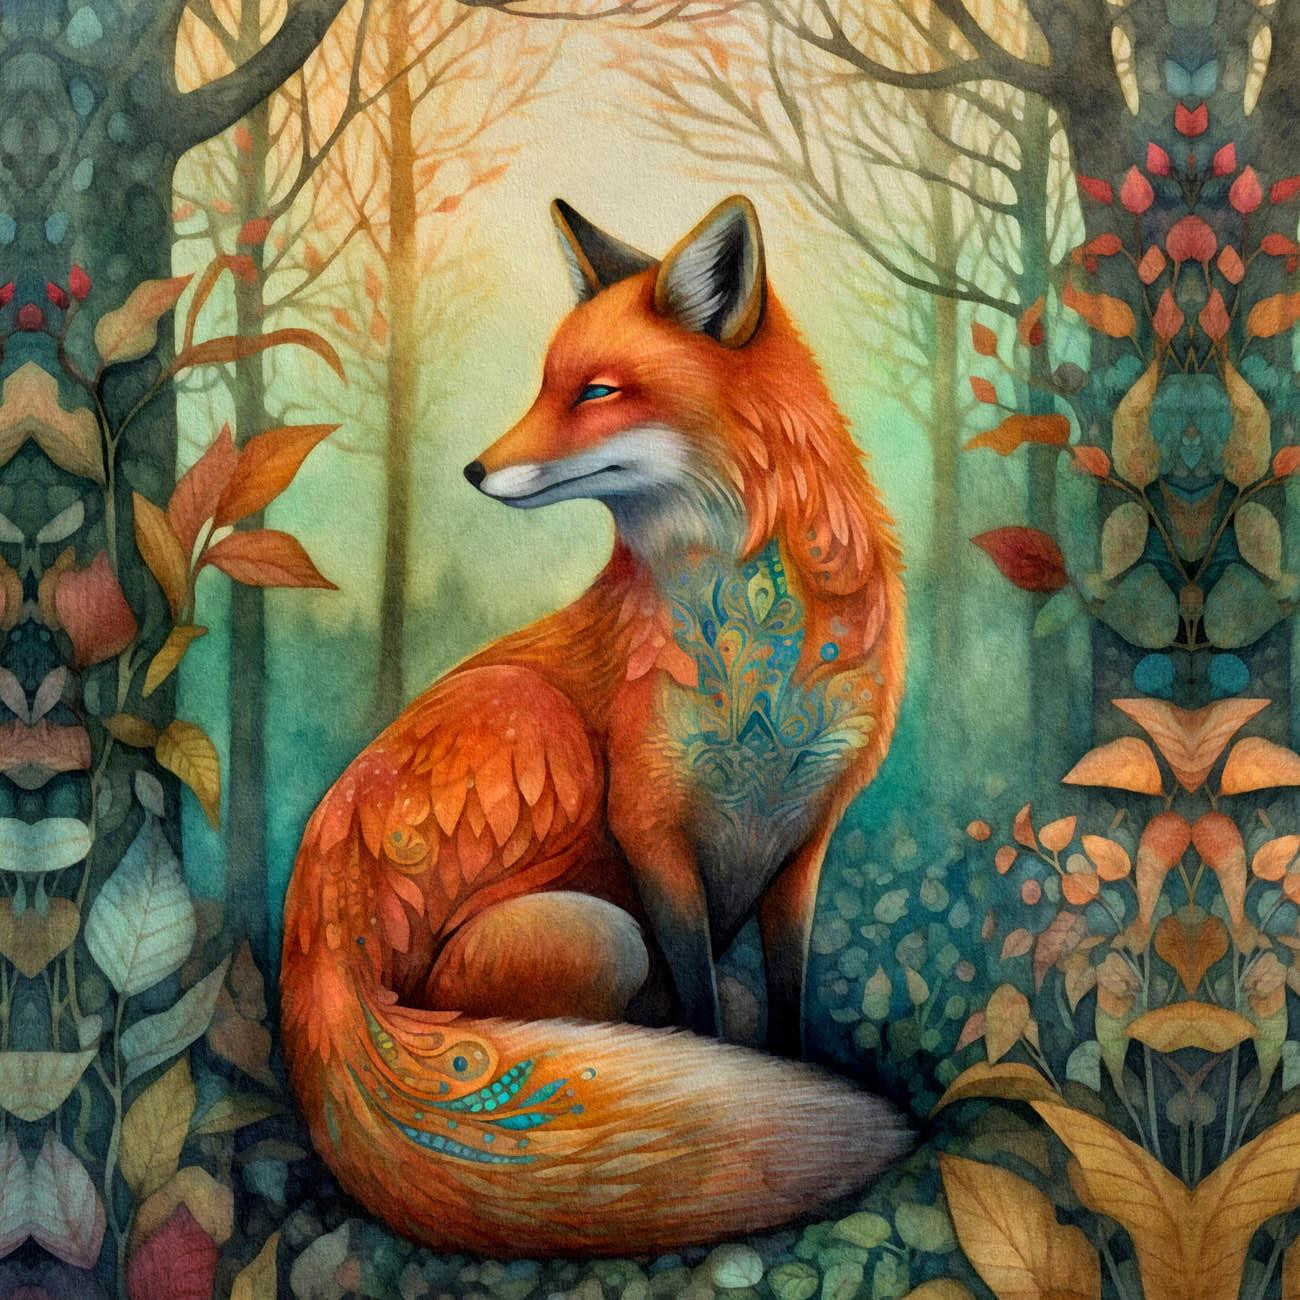 BOHO FOX - panel (60cm x 50cm)